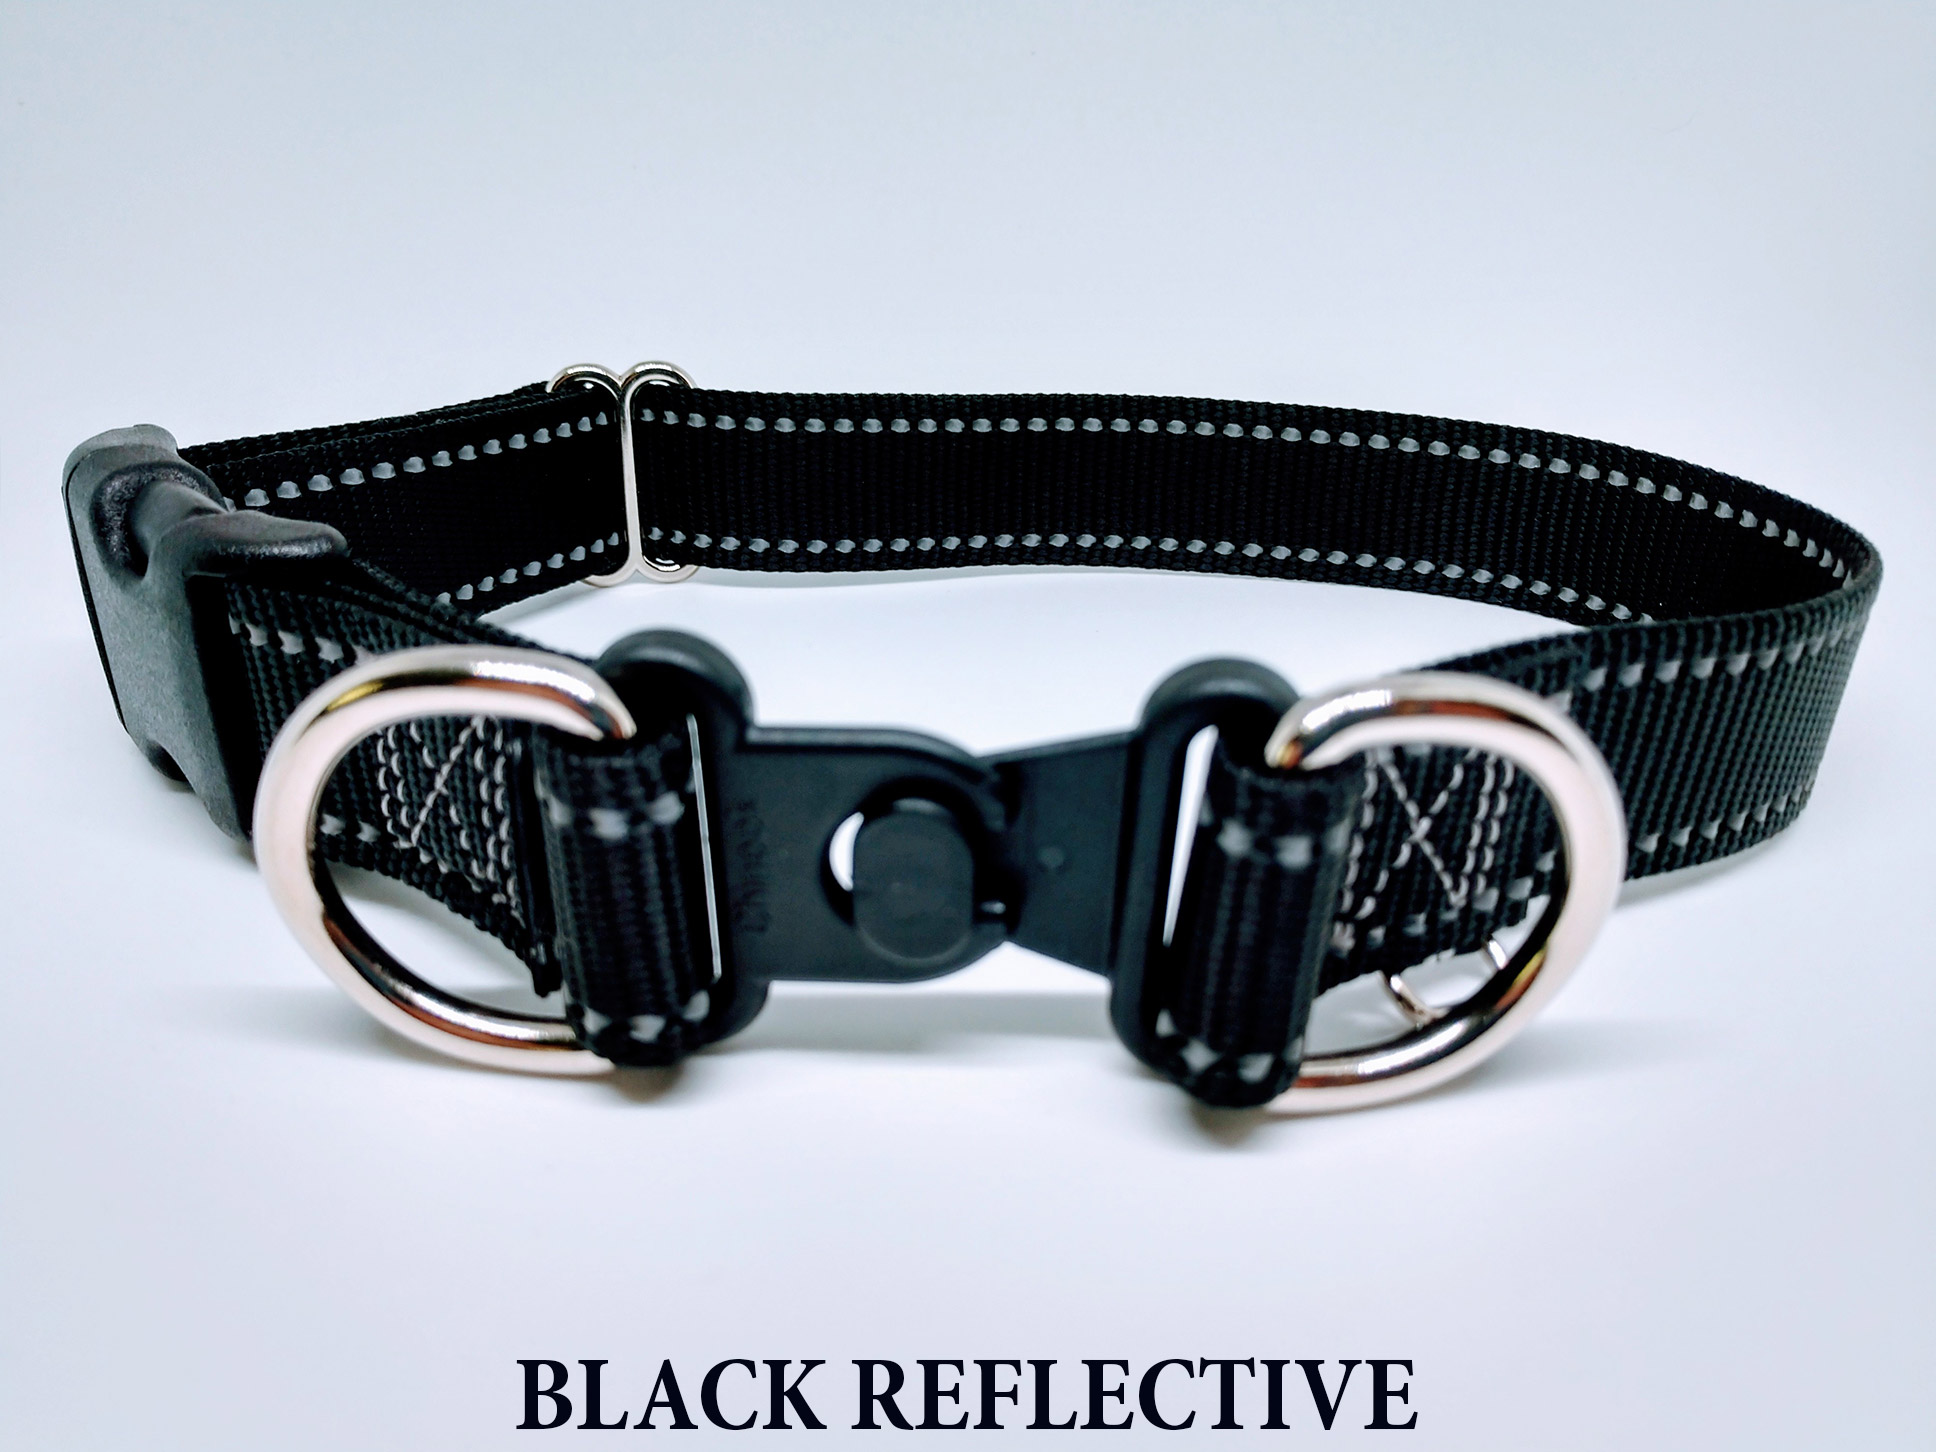 Black Leather Dog Collar - Small - Medium - Large - Native American Co